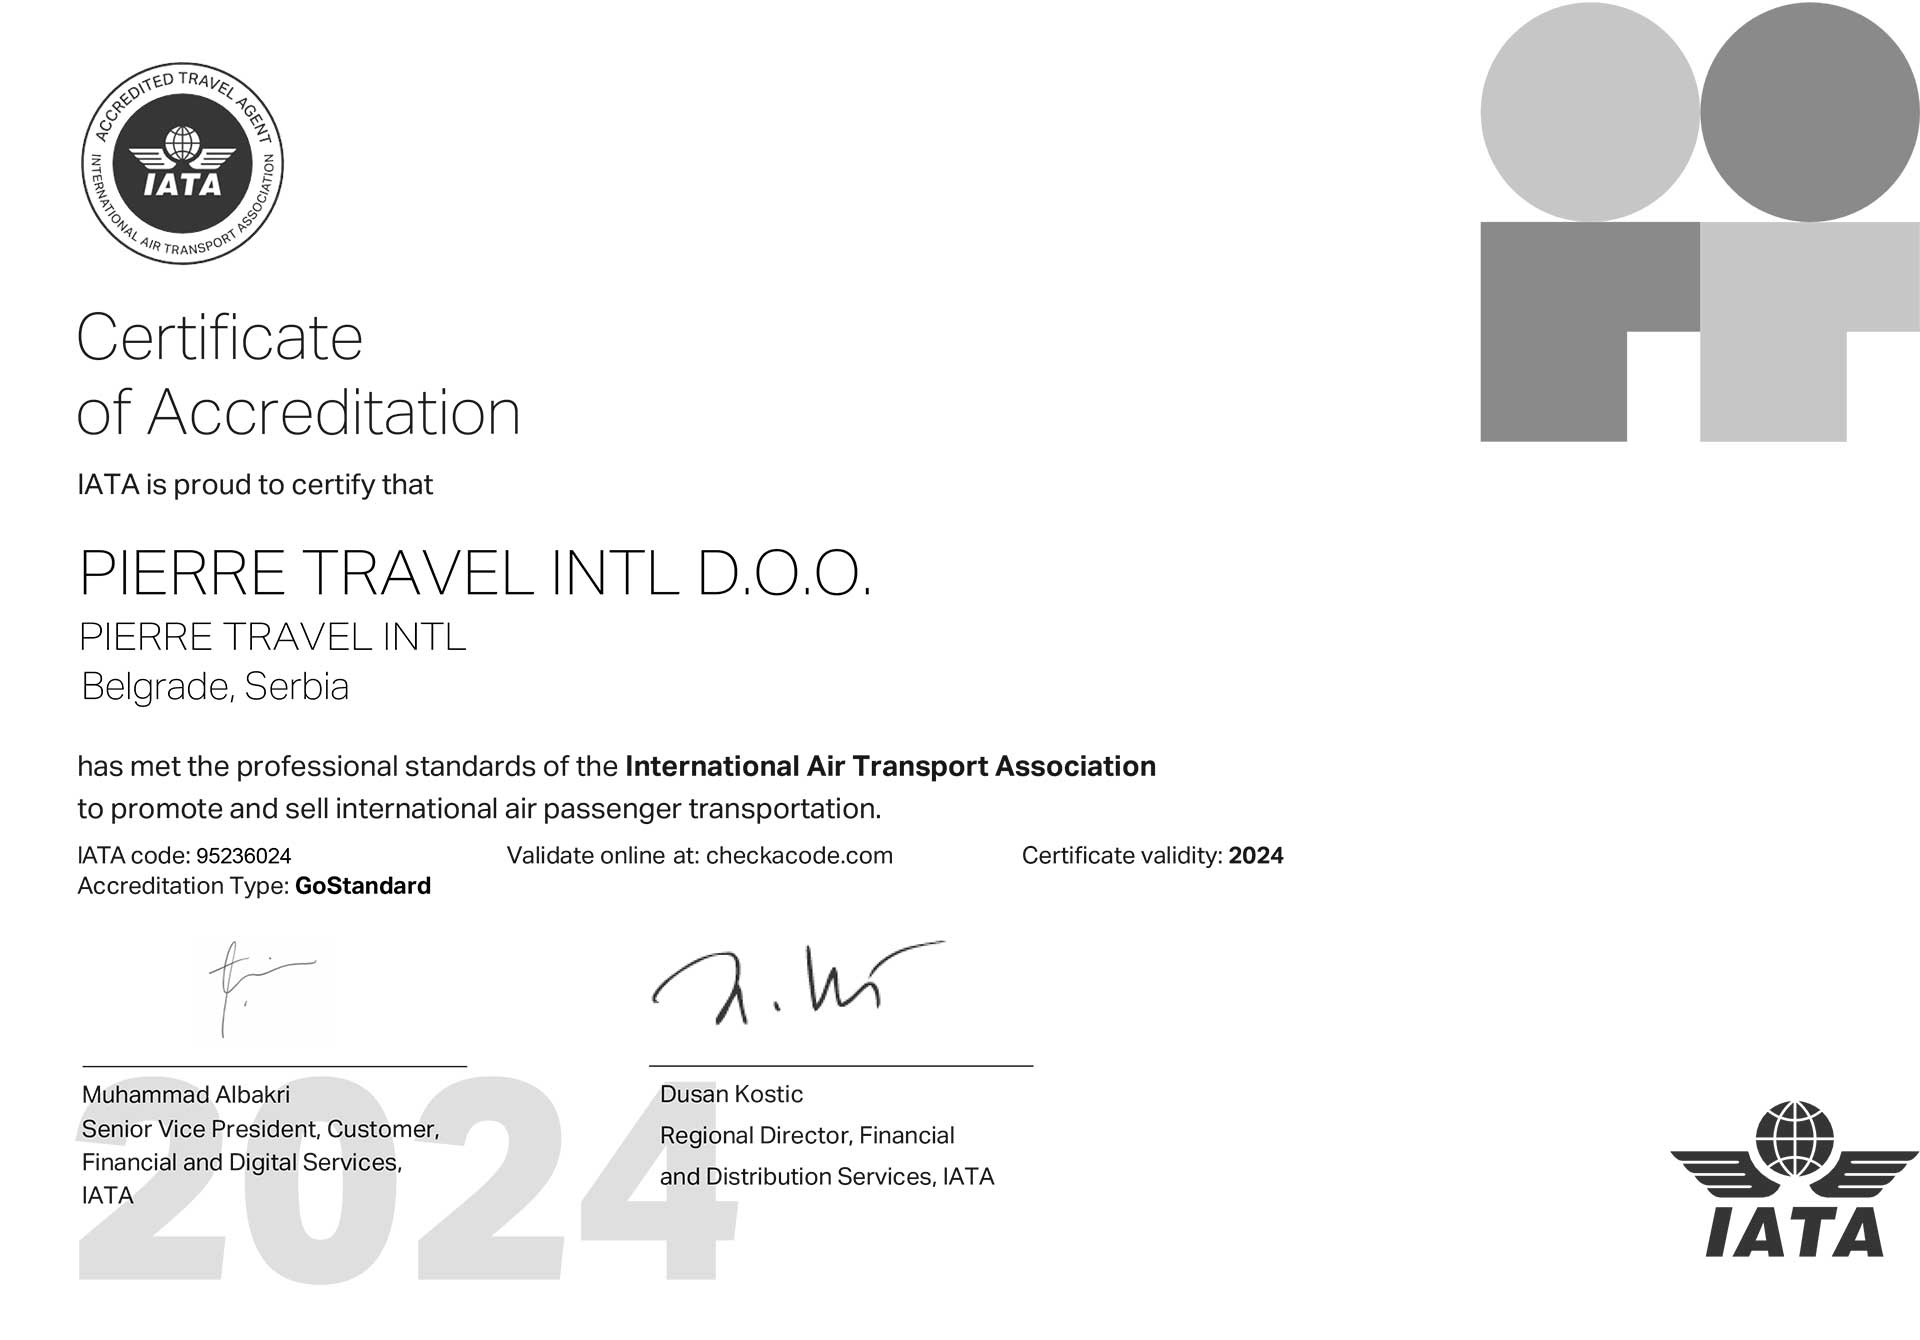 IATA certificate of accreditation